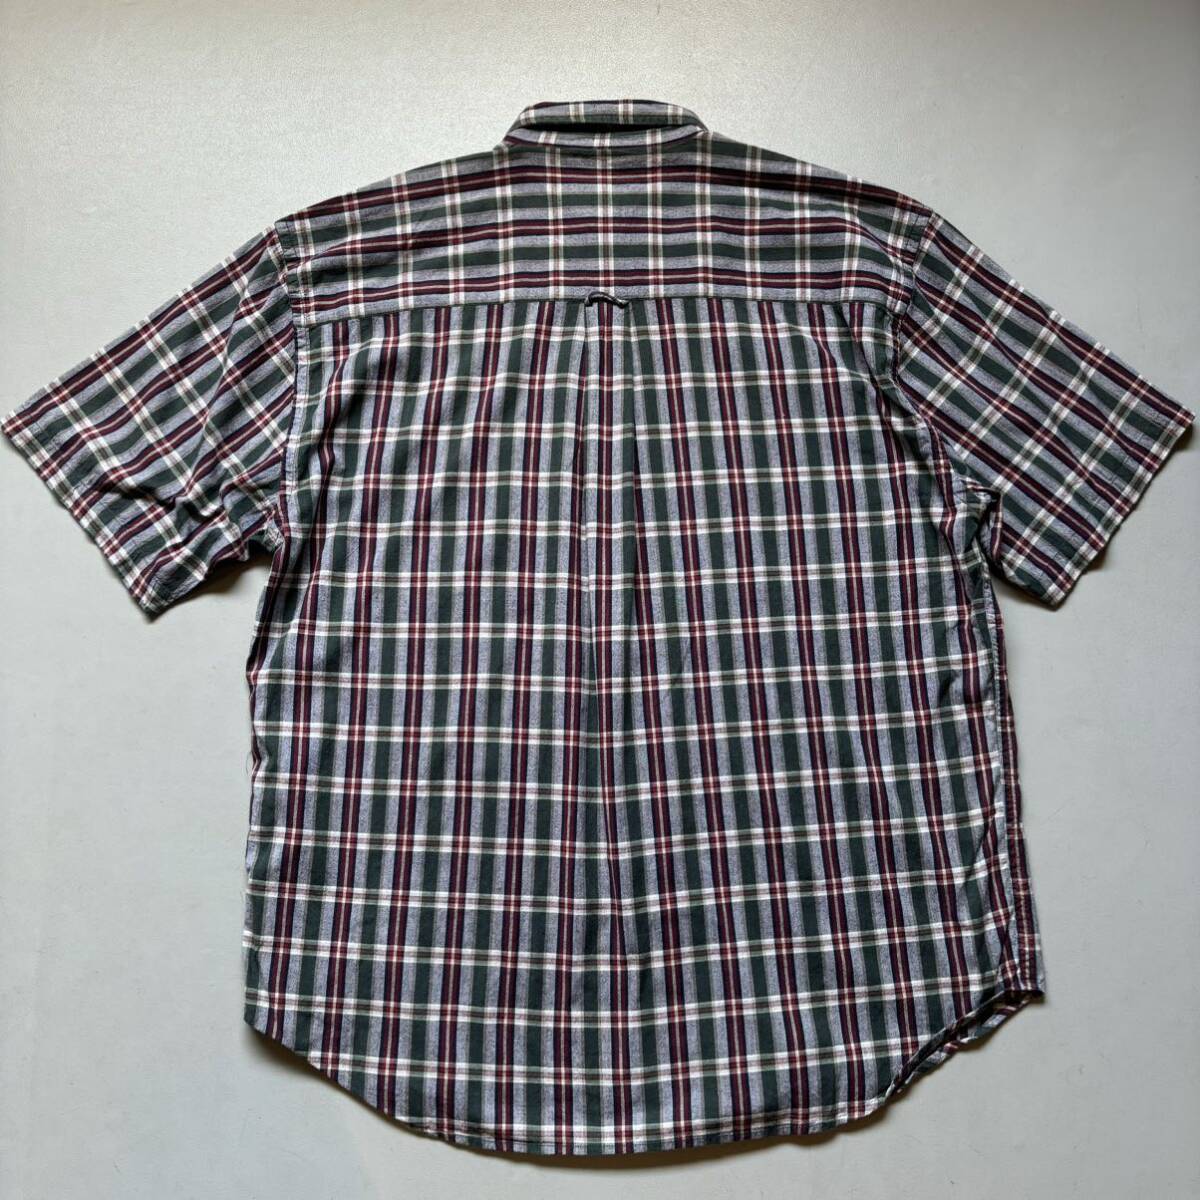 90s〜 Eddie Bauer S/S check shirt “size L” 90年代 エディバウアー 半袖シャツ チェックシャツ ボタンダウンシャツ